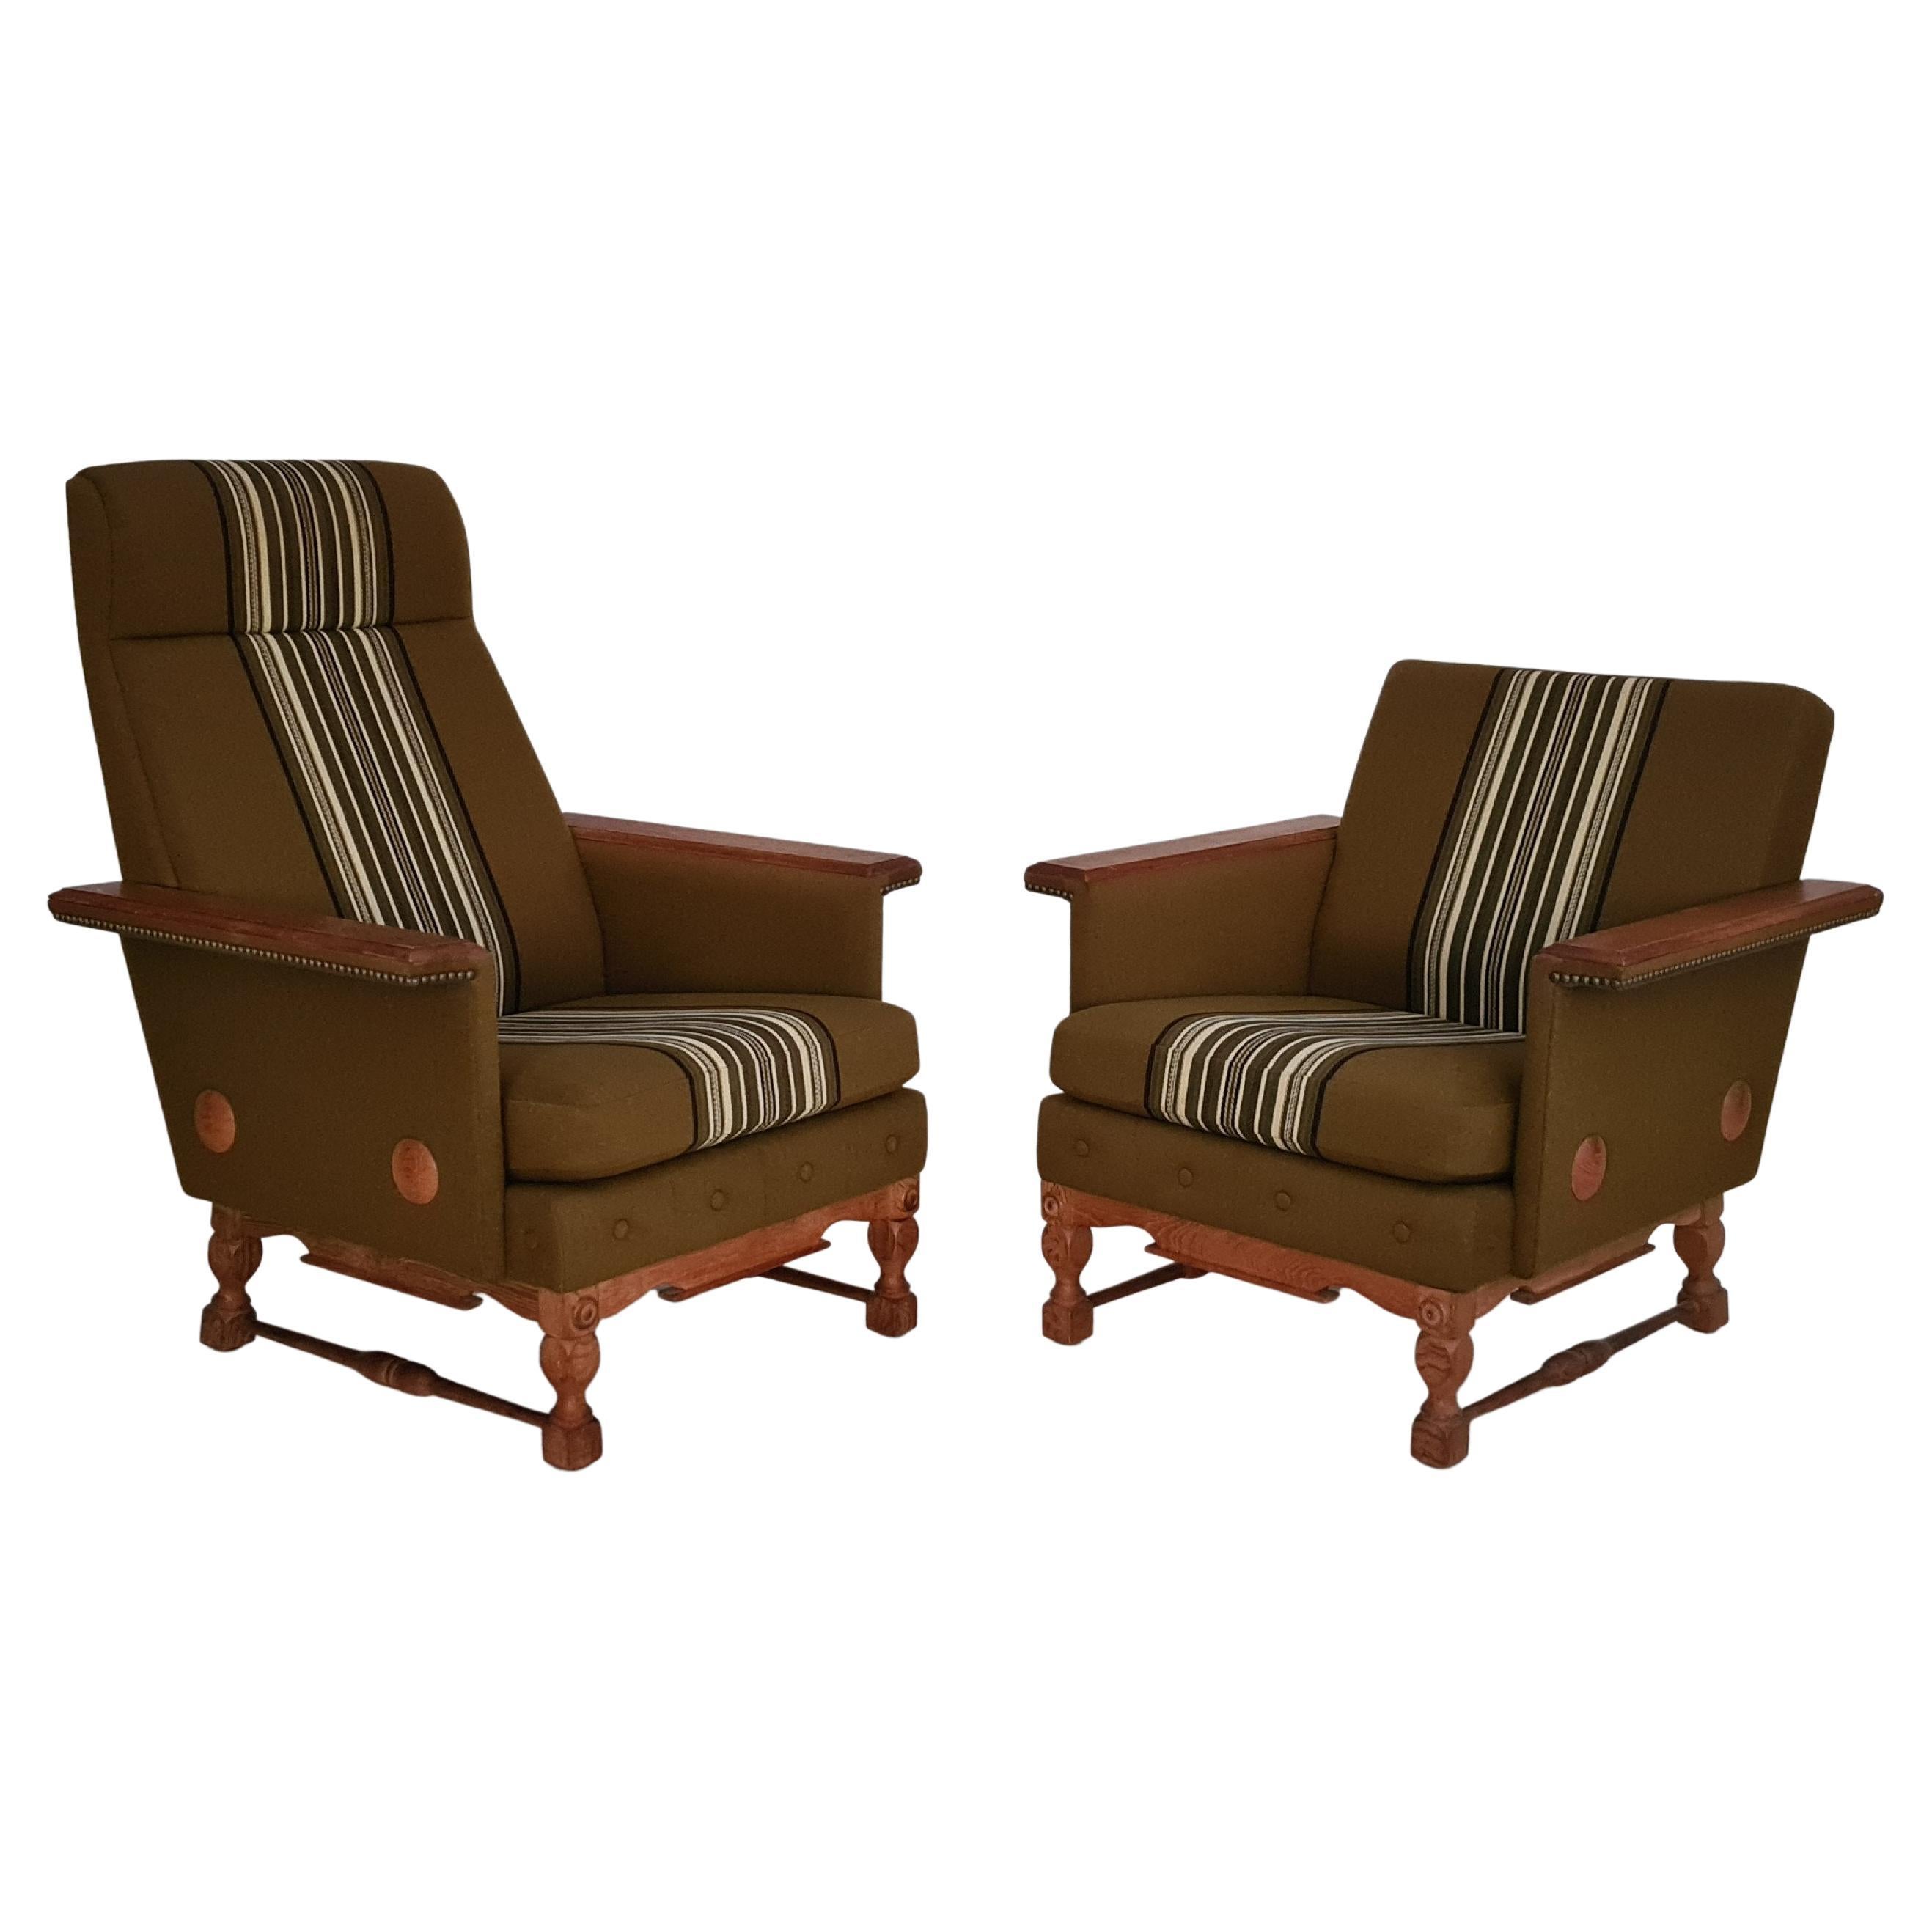 1970s, Danish Design, Set of Armchairs, Oak Wood, Wool, Original Condition For Sale